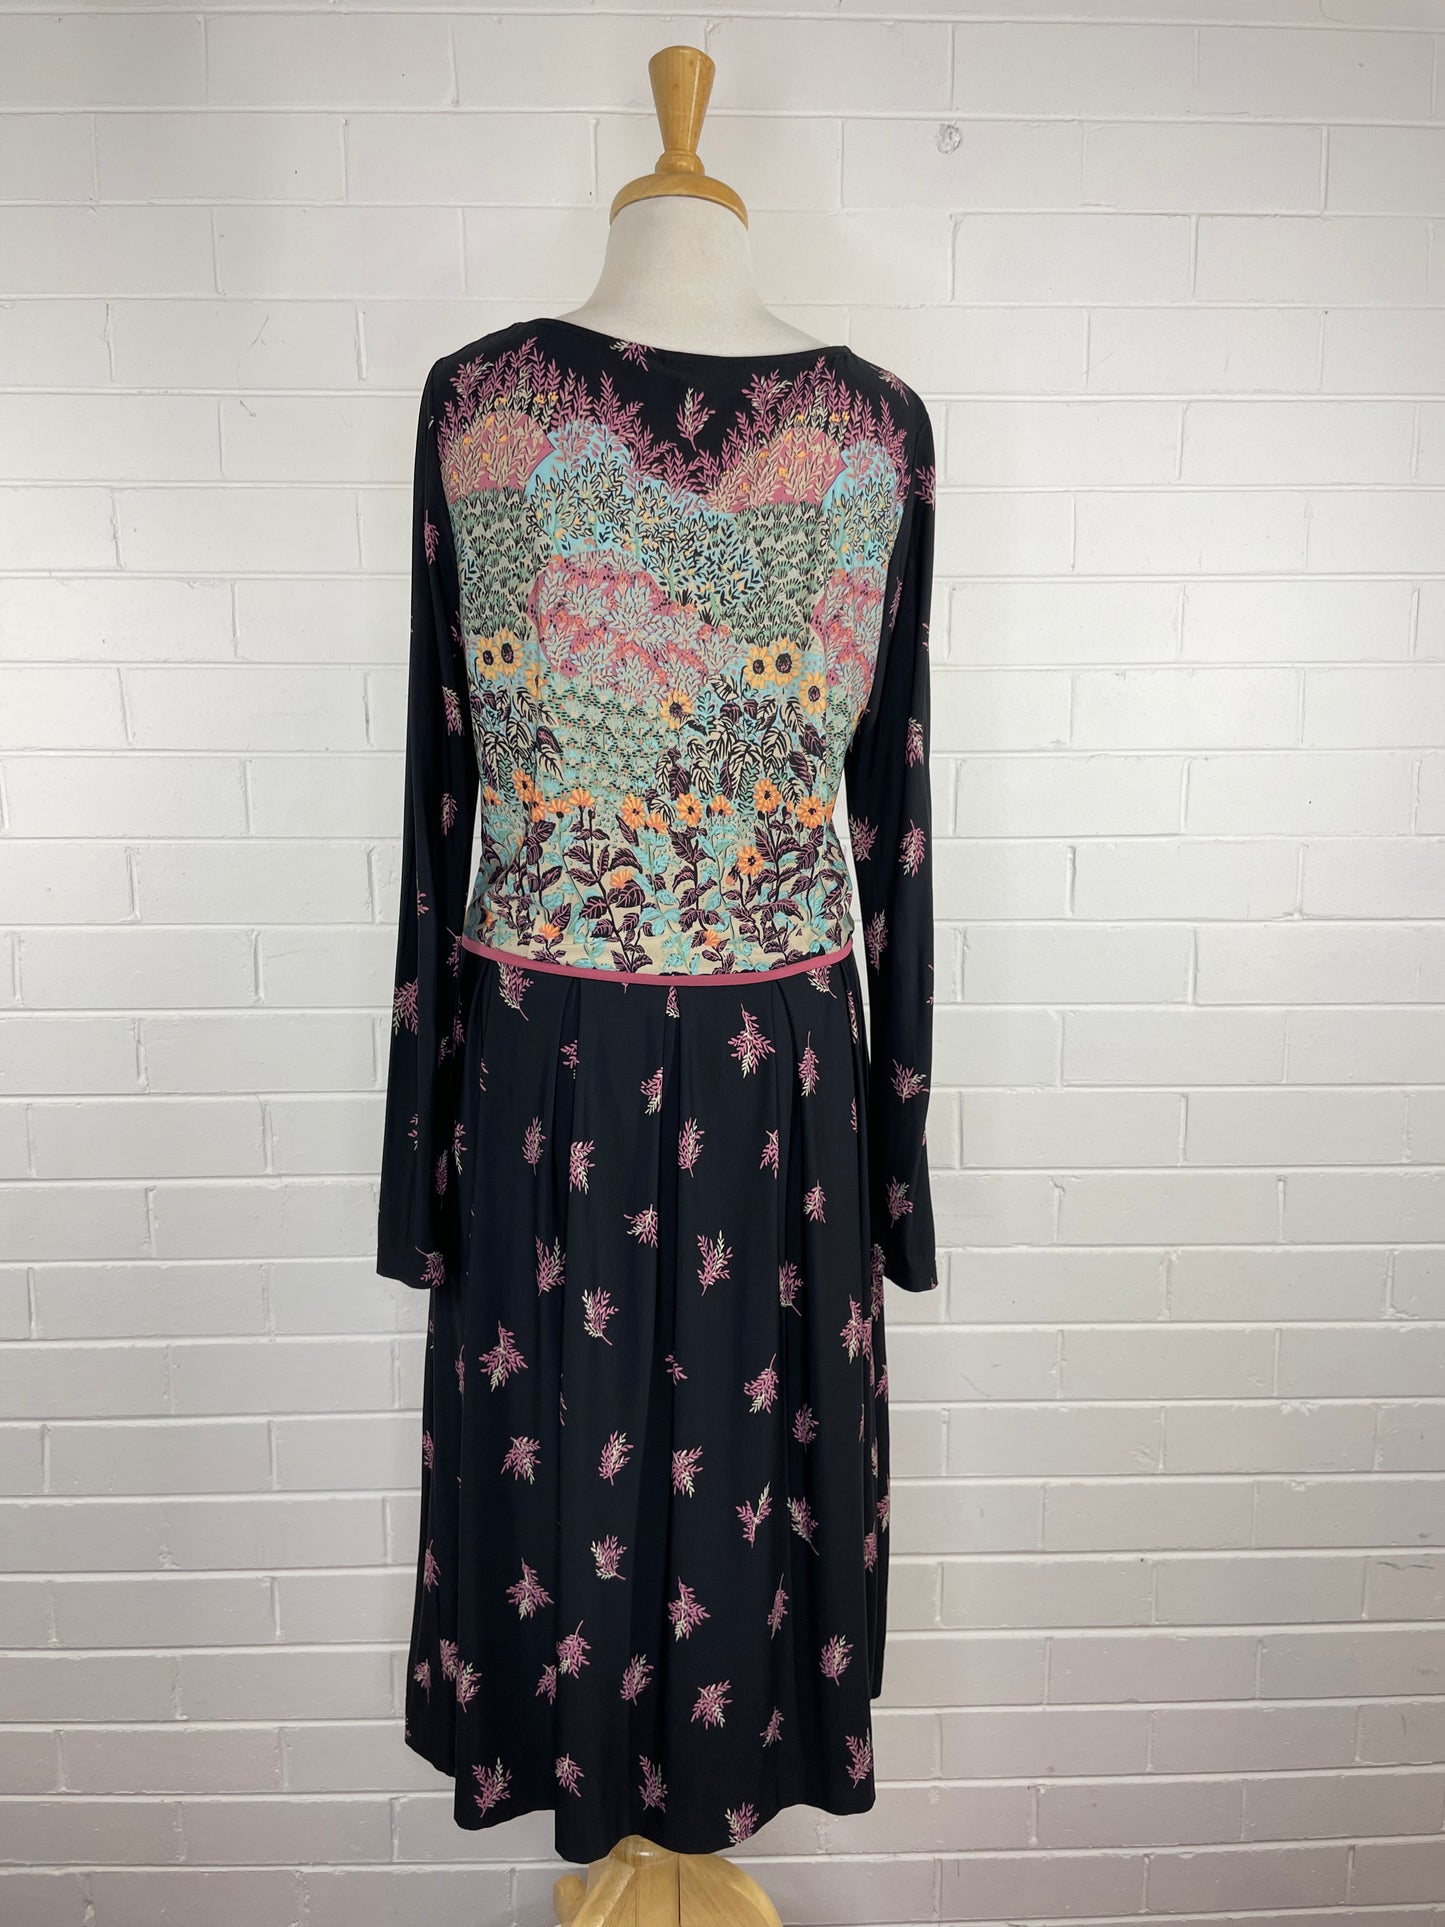 Leona Edmiston | dress | size 10 | midi length